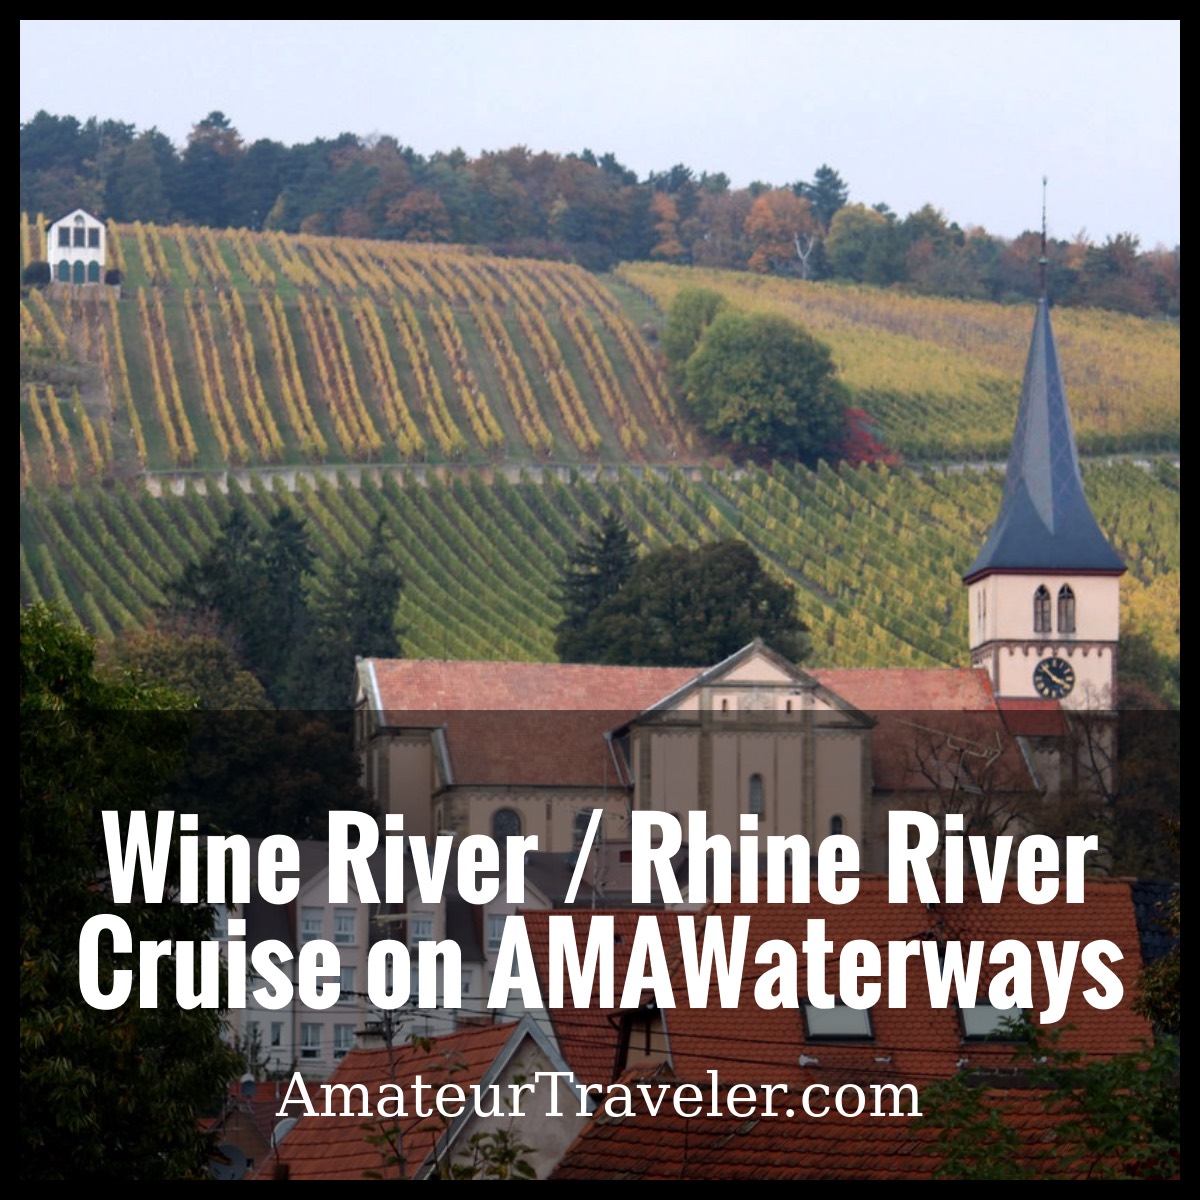 Wine River / Rhine River Cruise on AMAWaterways